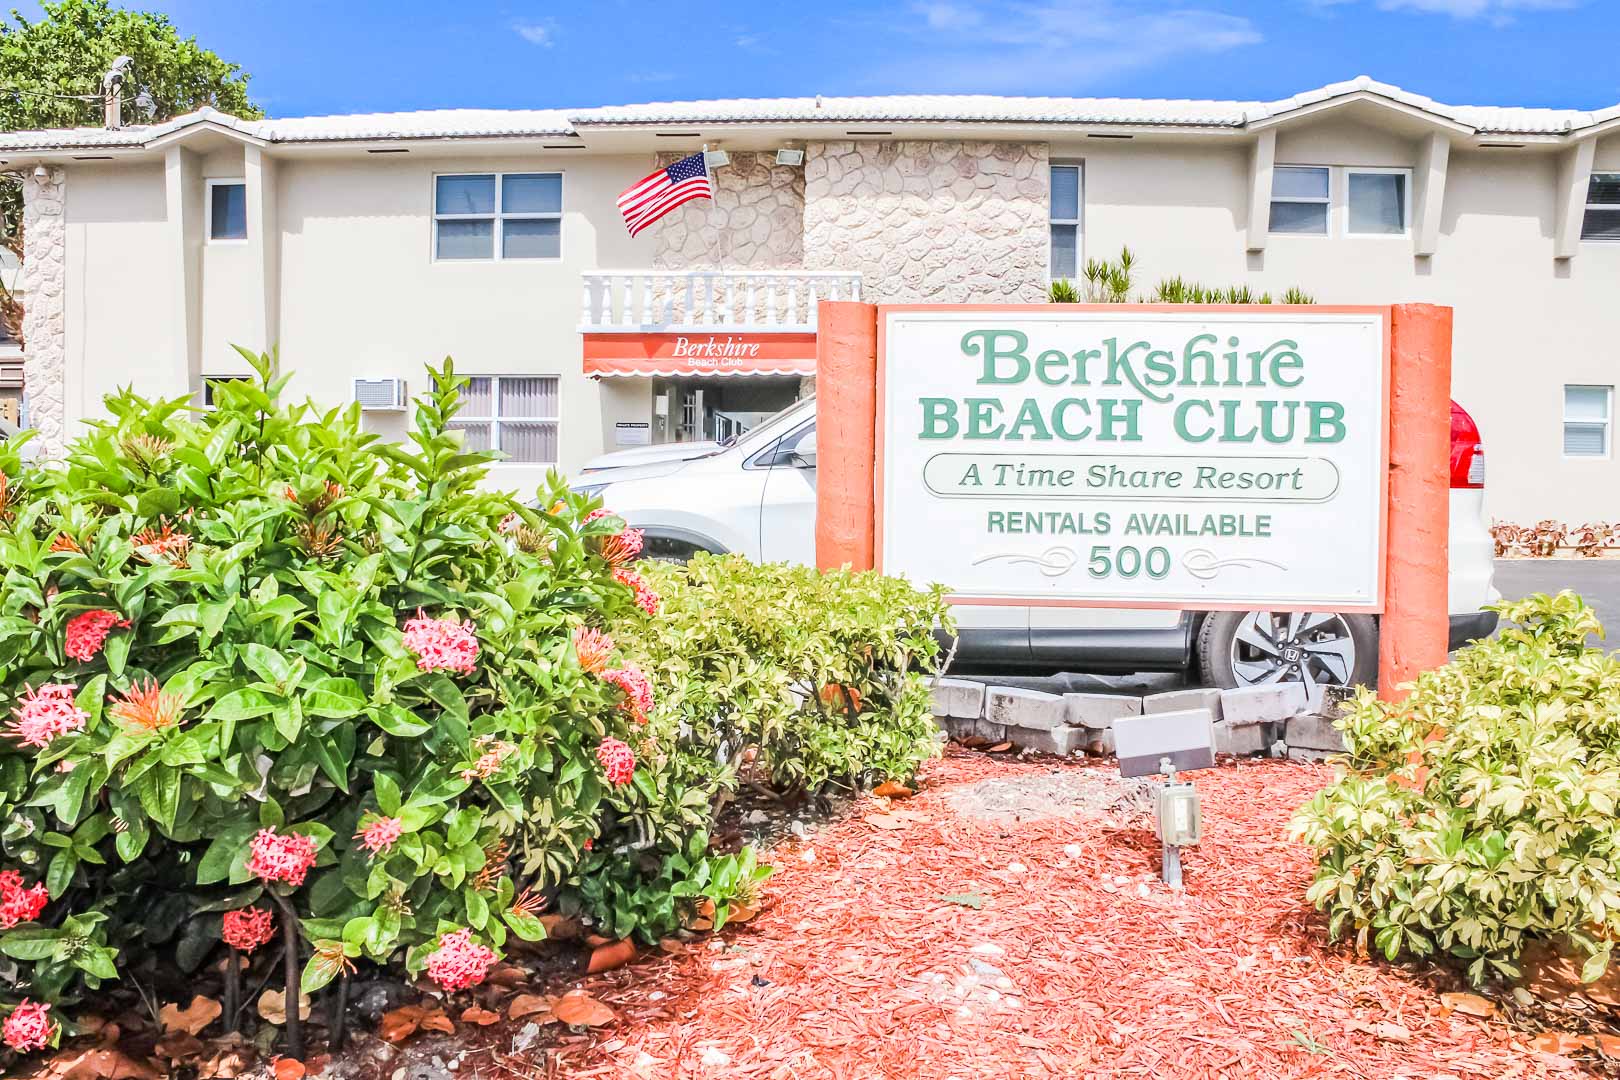 The inviting resort entrance at VRI's Berkshire Beach Club in Florida